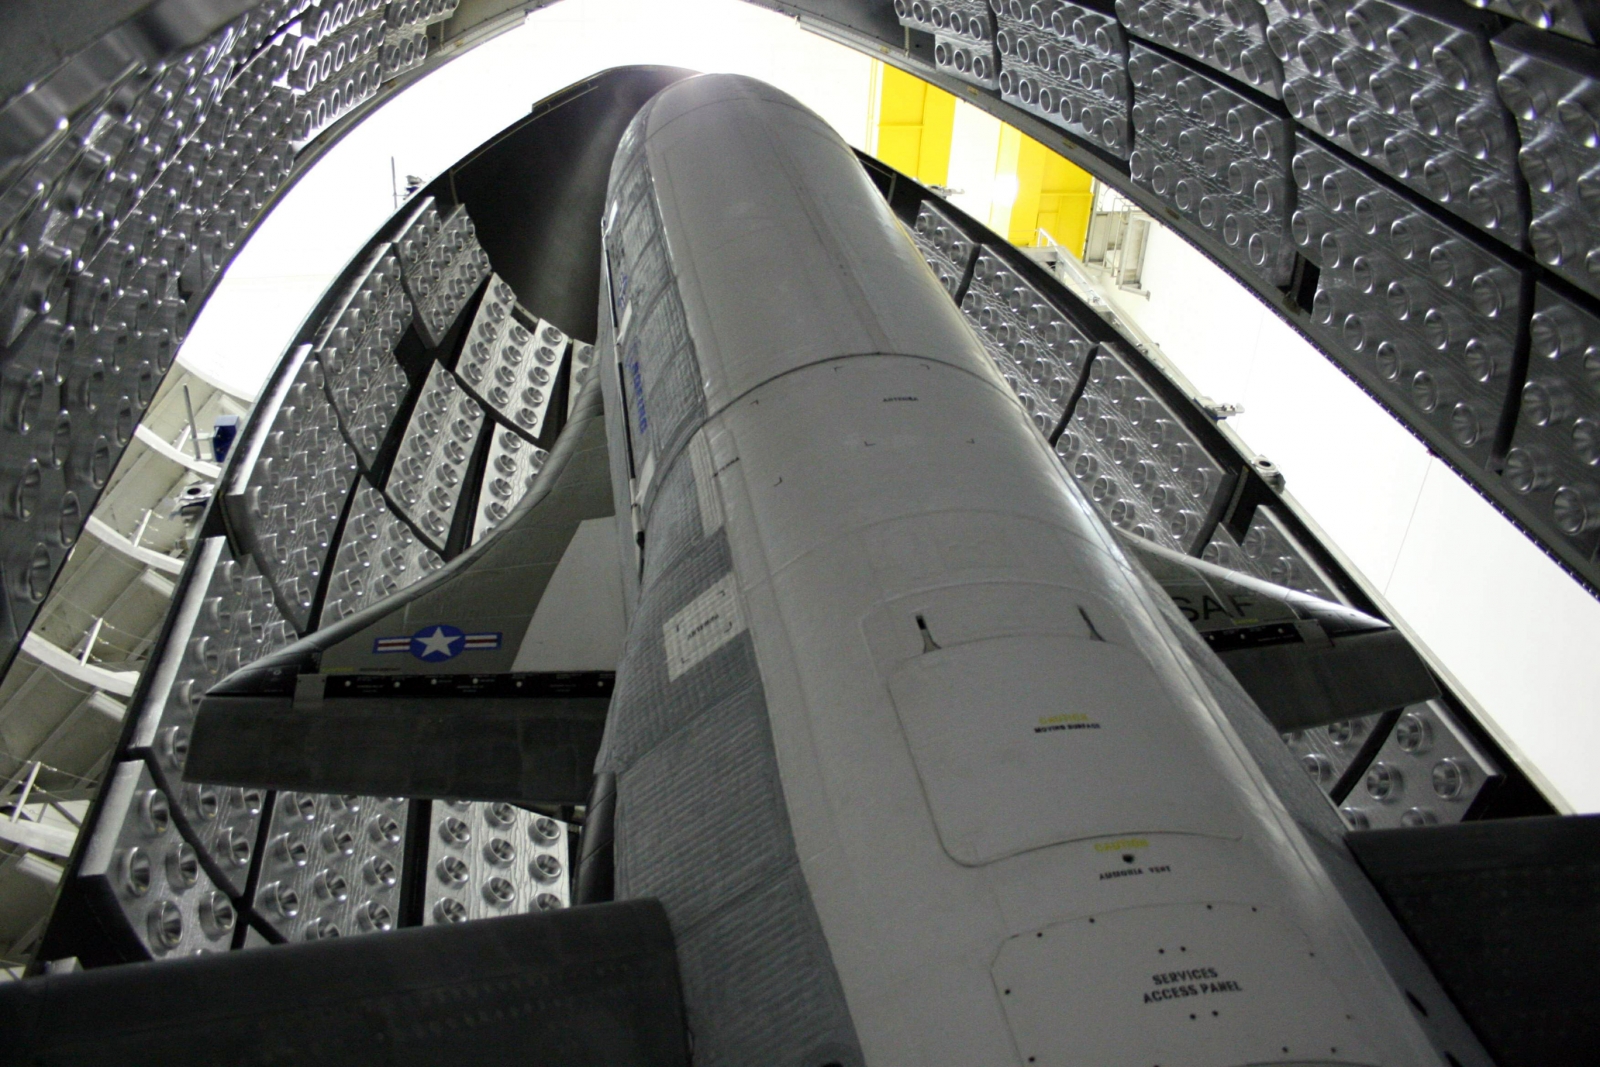 The X-37B Orbital Test Vehicle